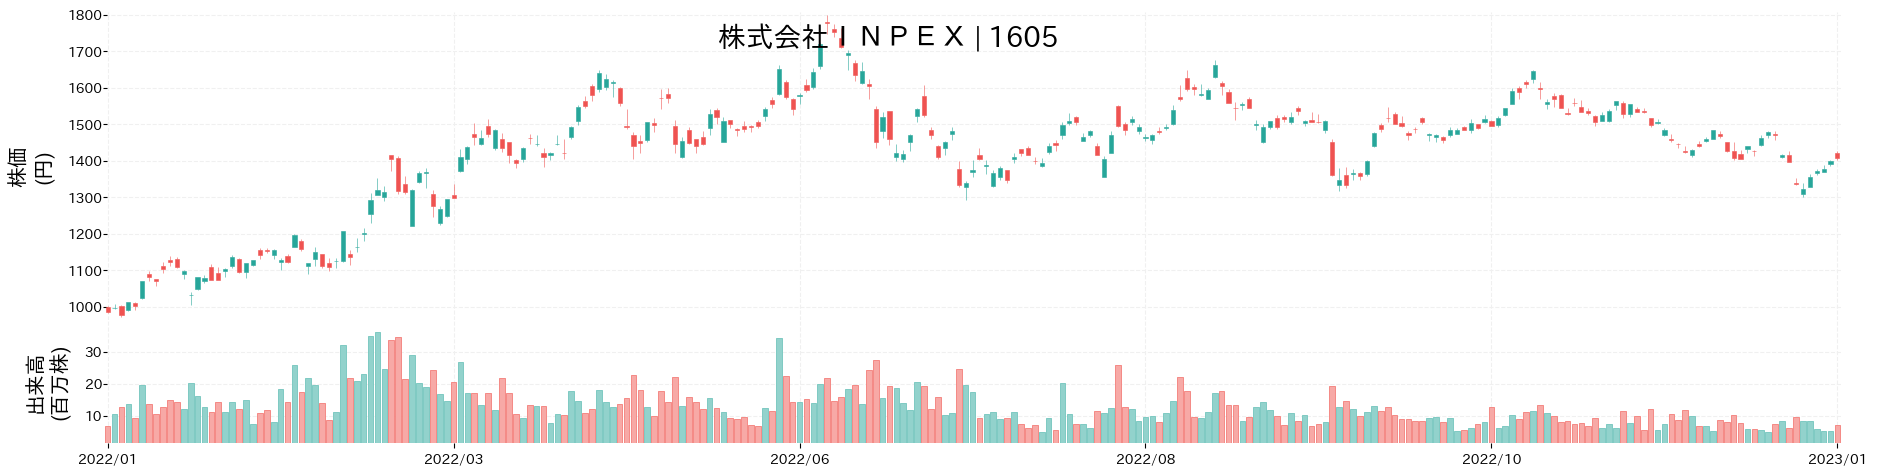 INPEXの株価推移(2022)